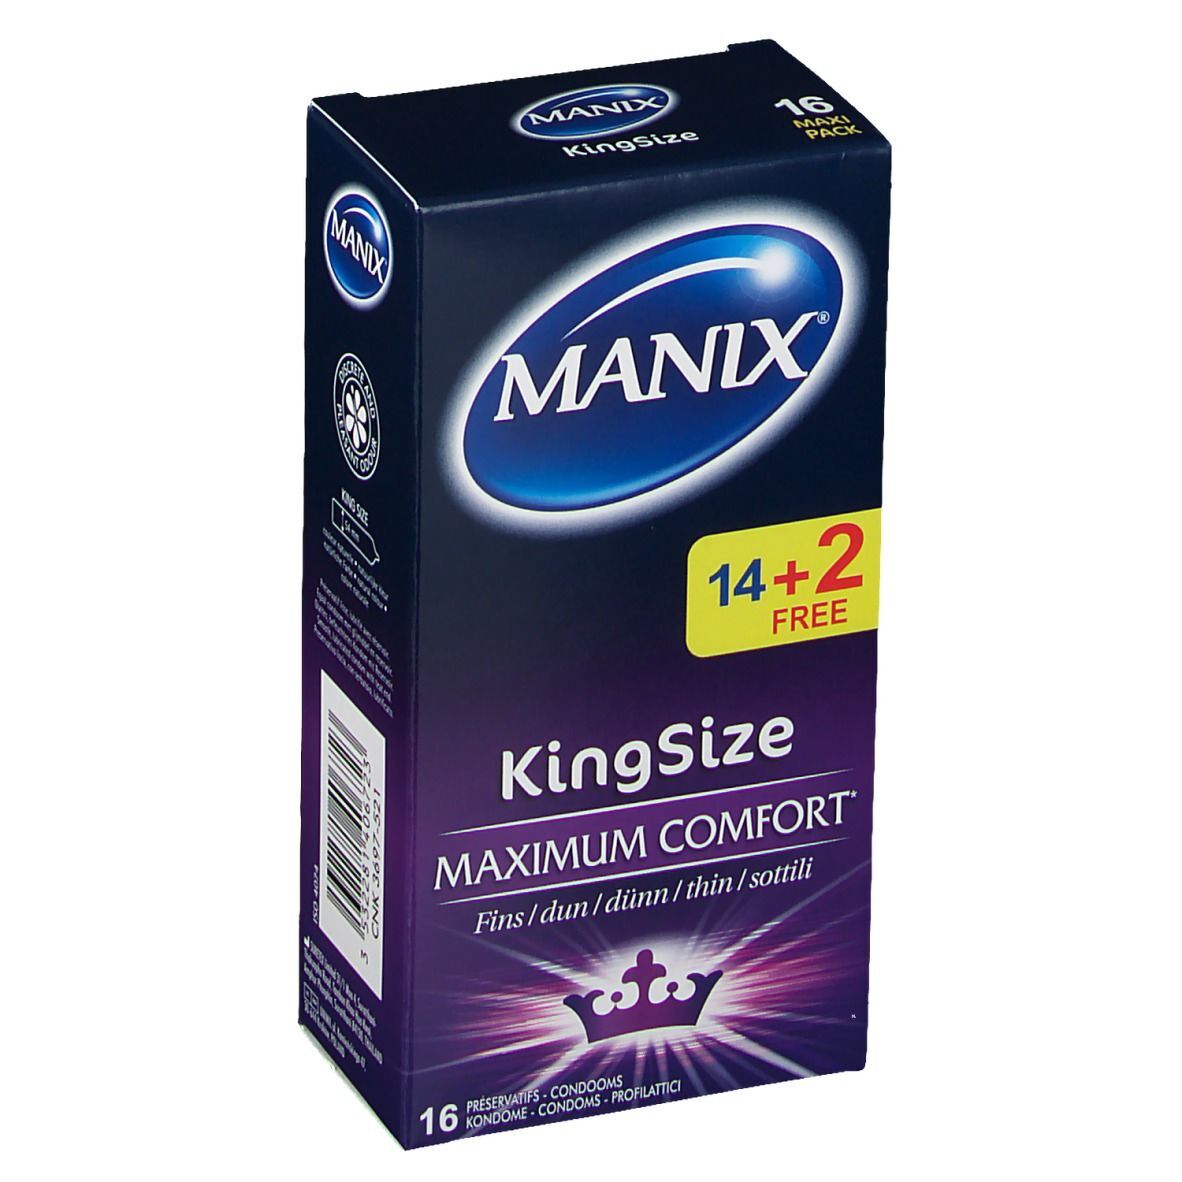 Manix® KingSize Maximum Comfort